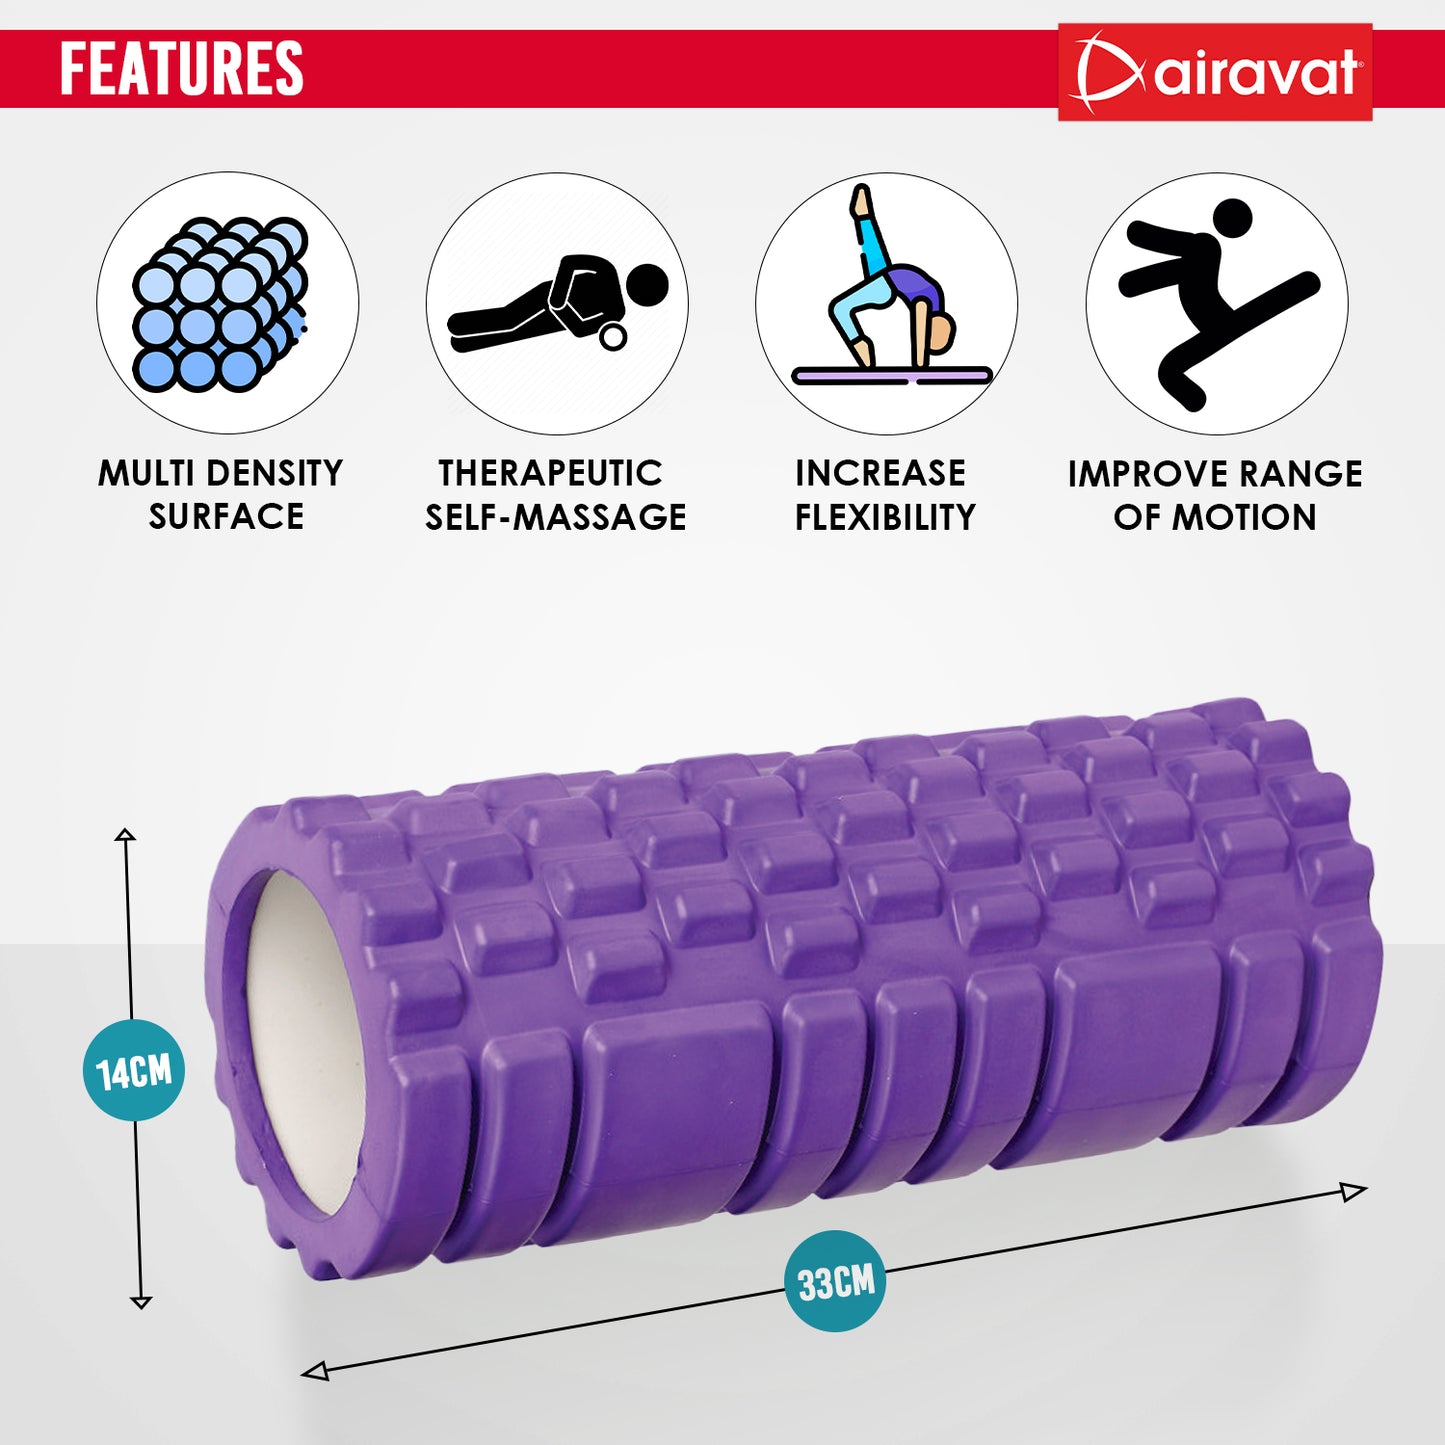 Yoga Foam roller features purple